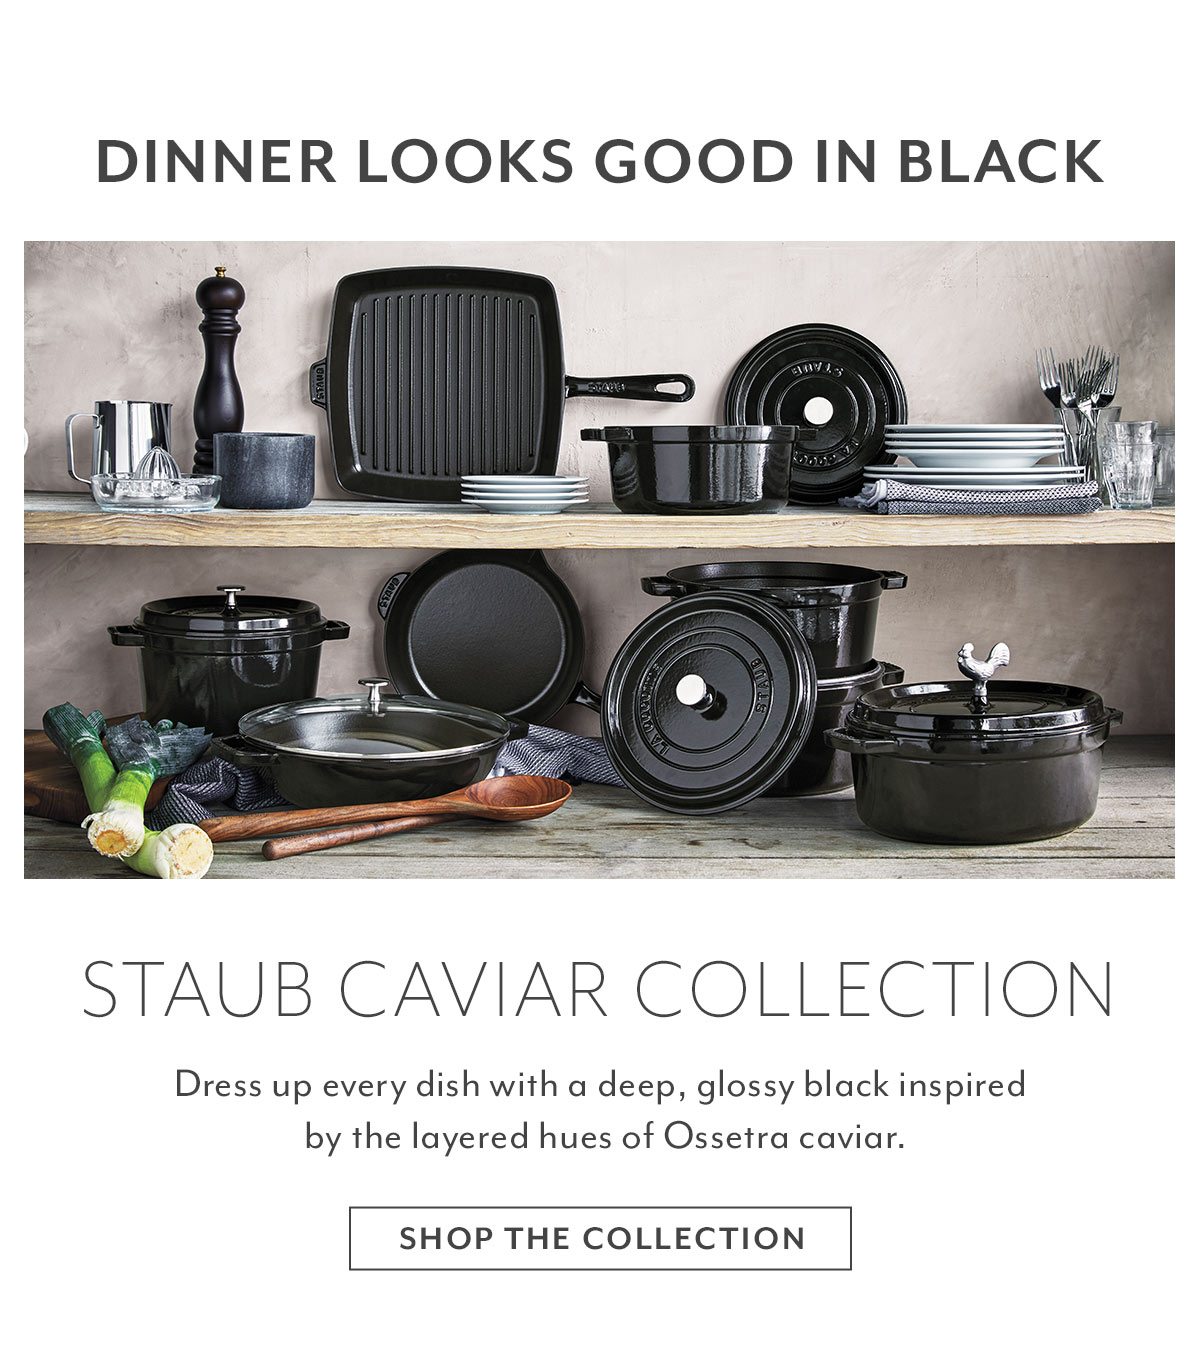 Staub Caviar Collection